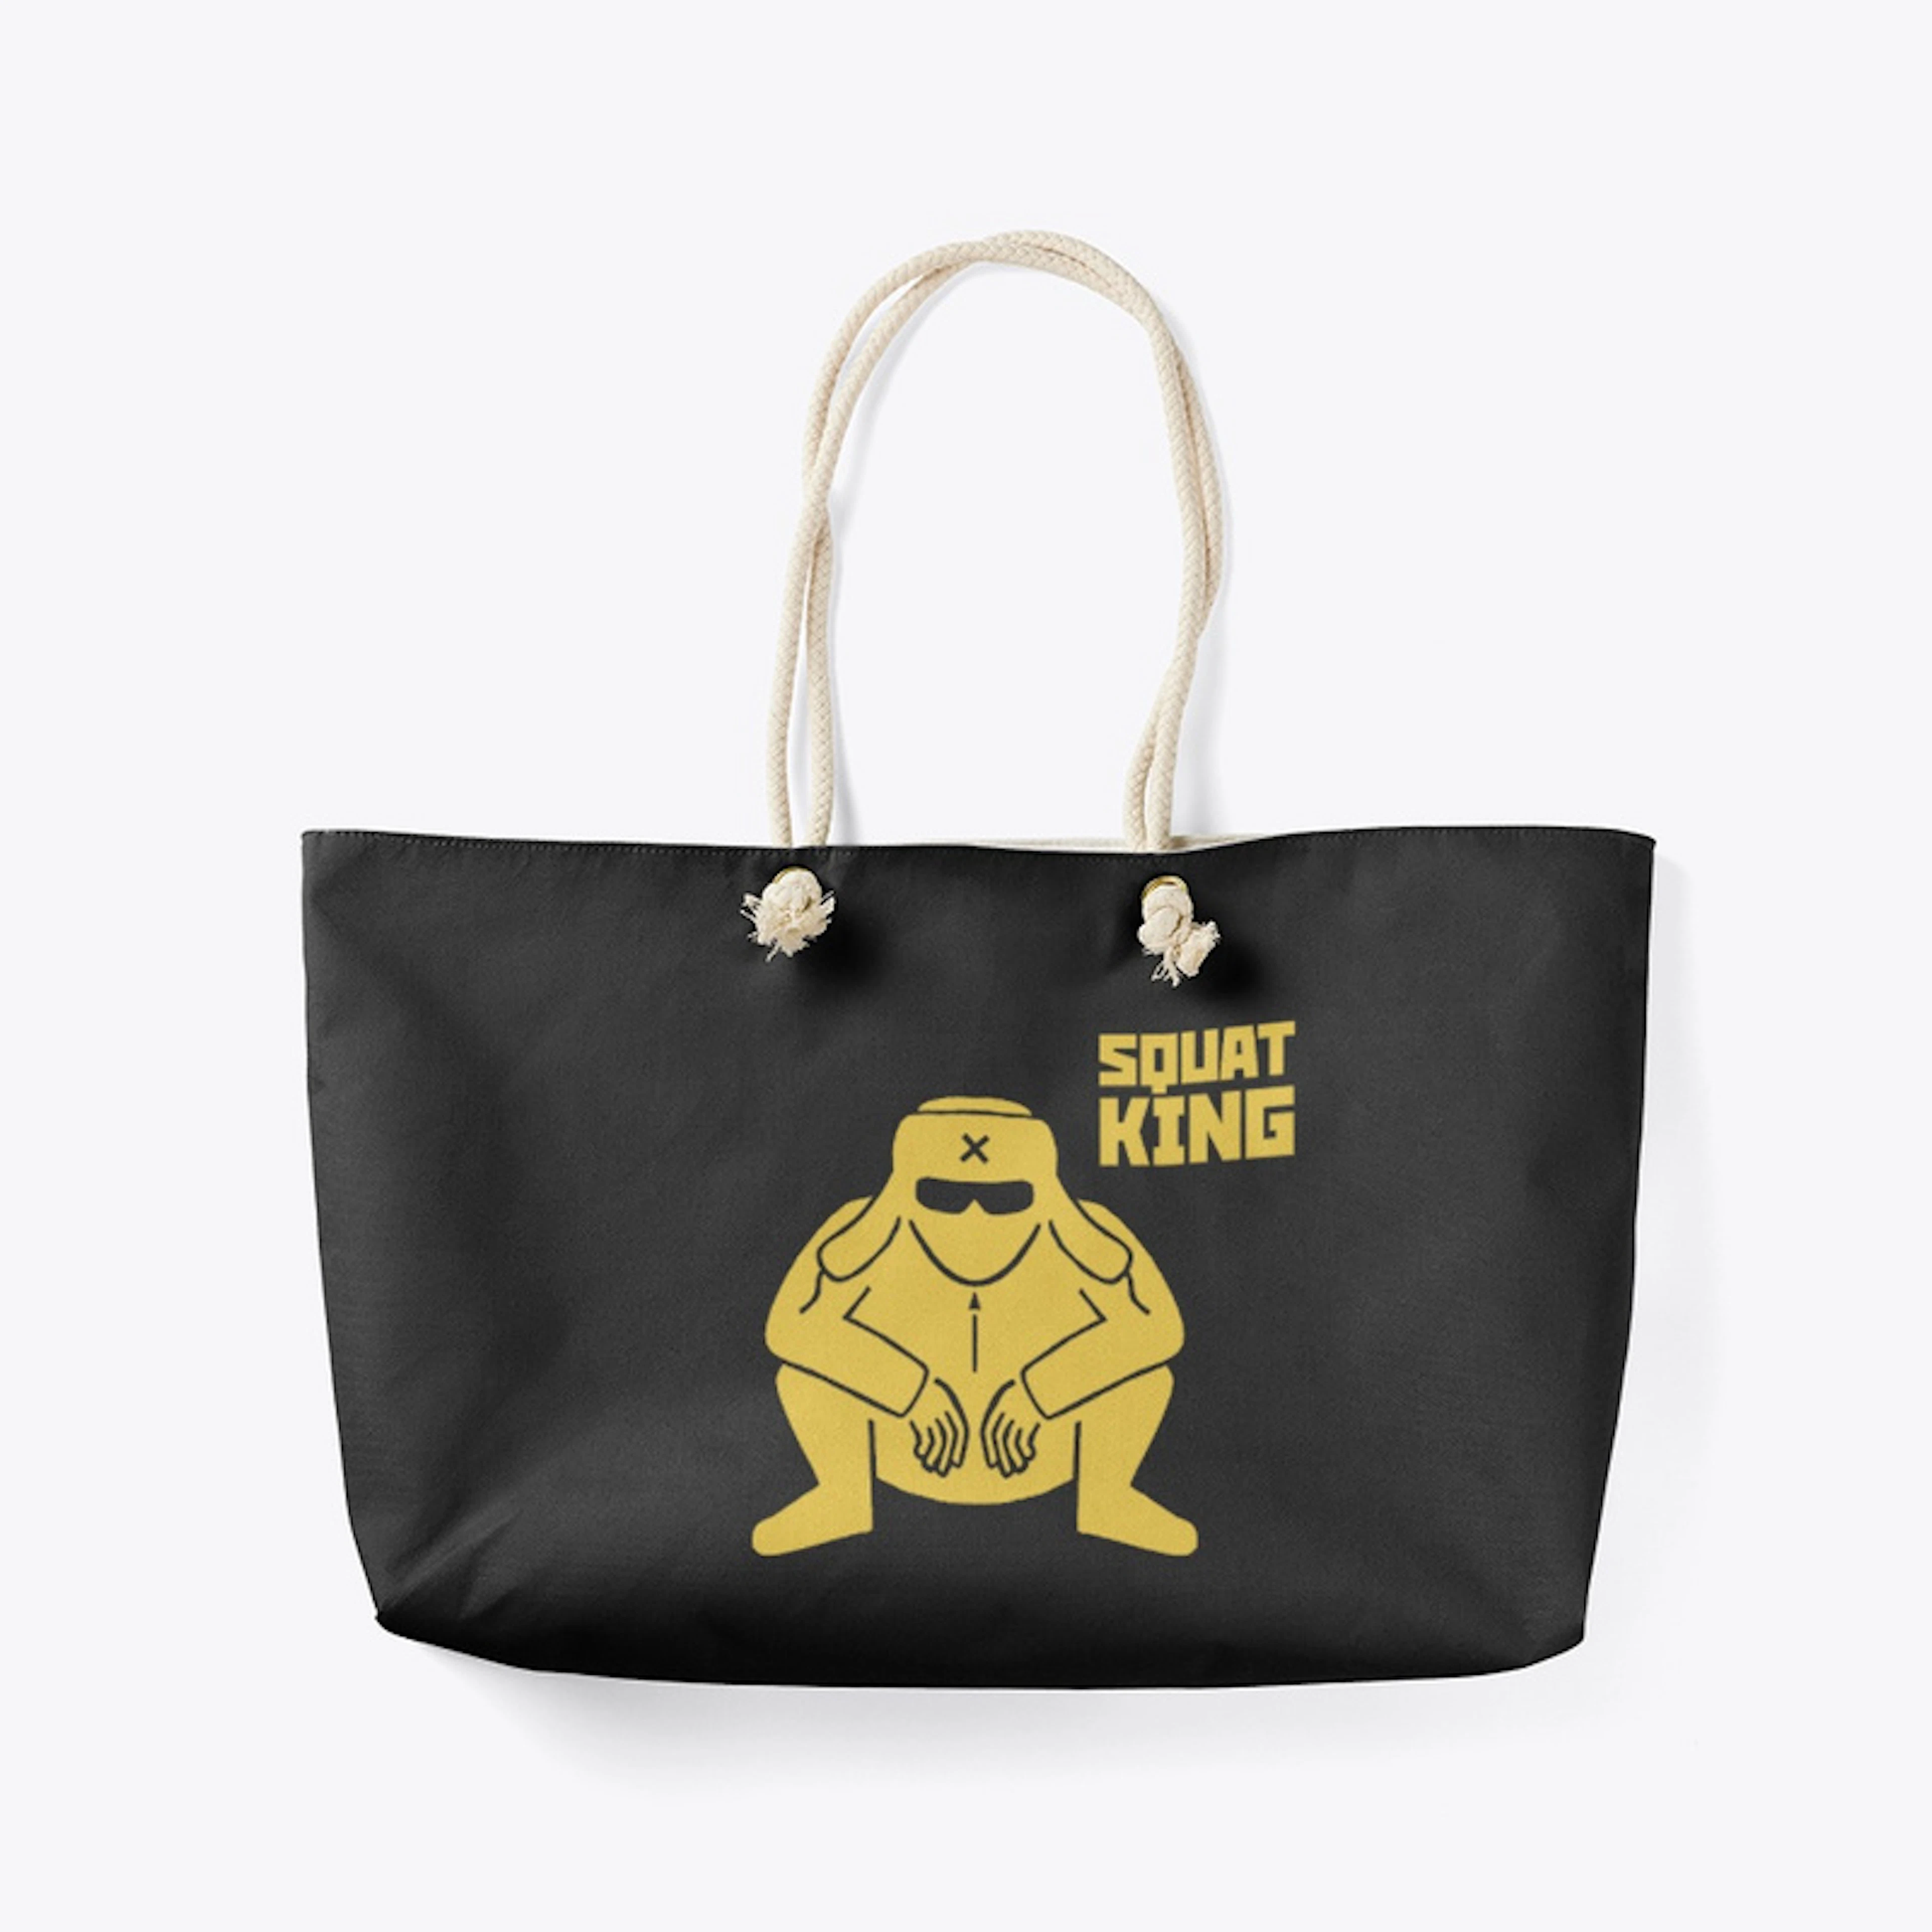 Squat King bag